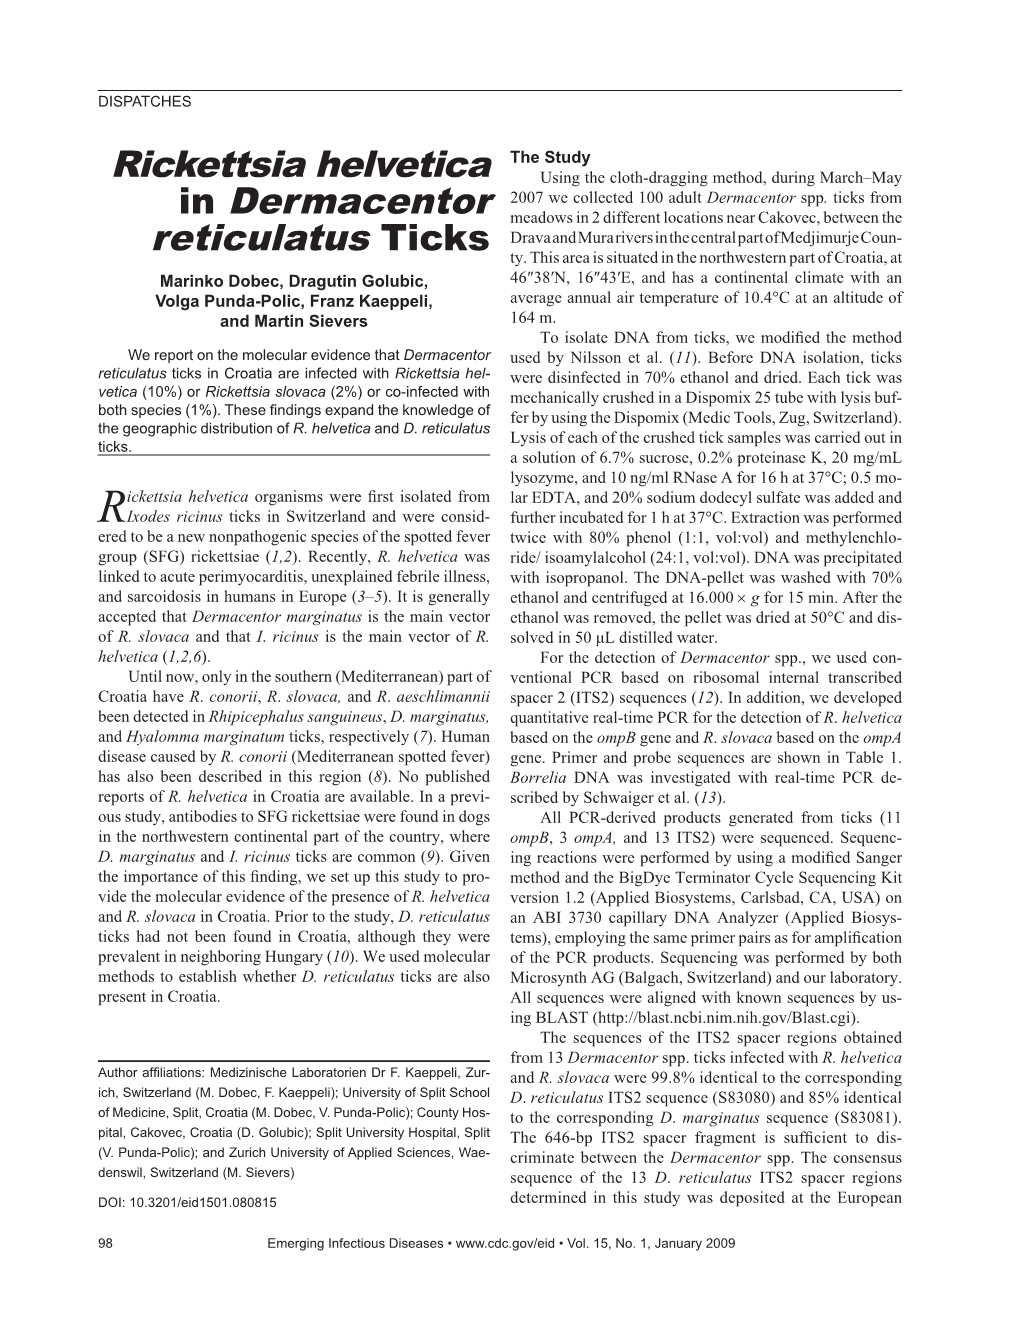 Rickettsia Helvetica in Dermacentor Reticulatus Ticks